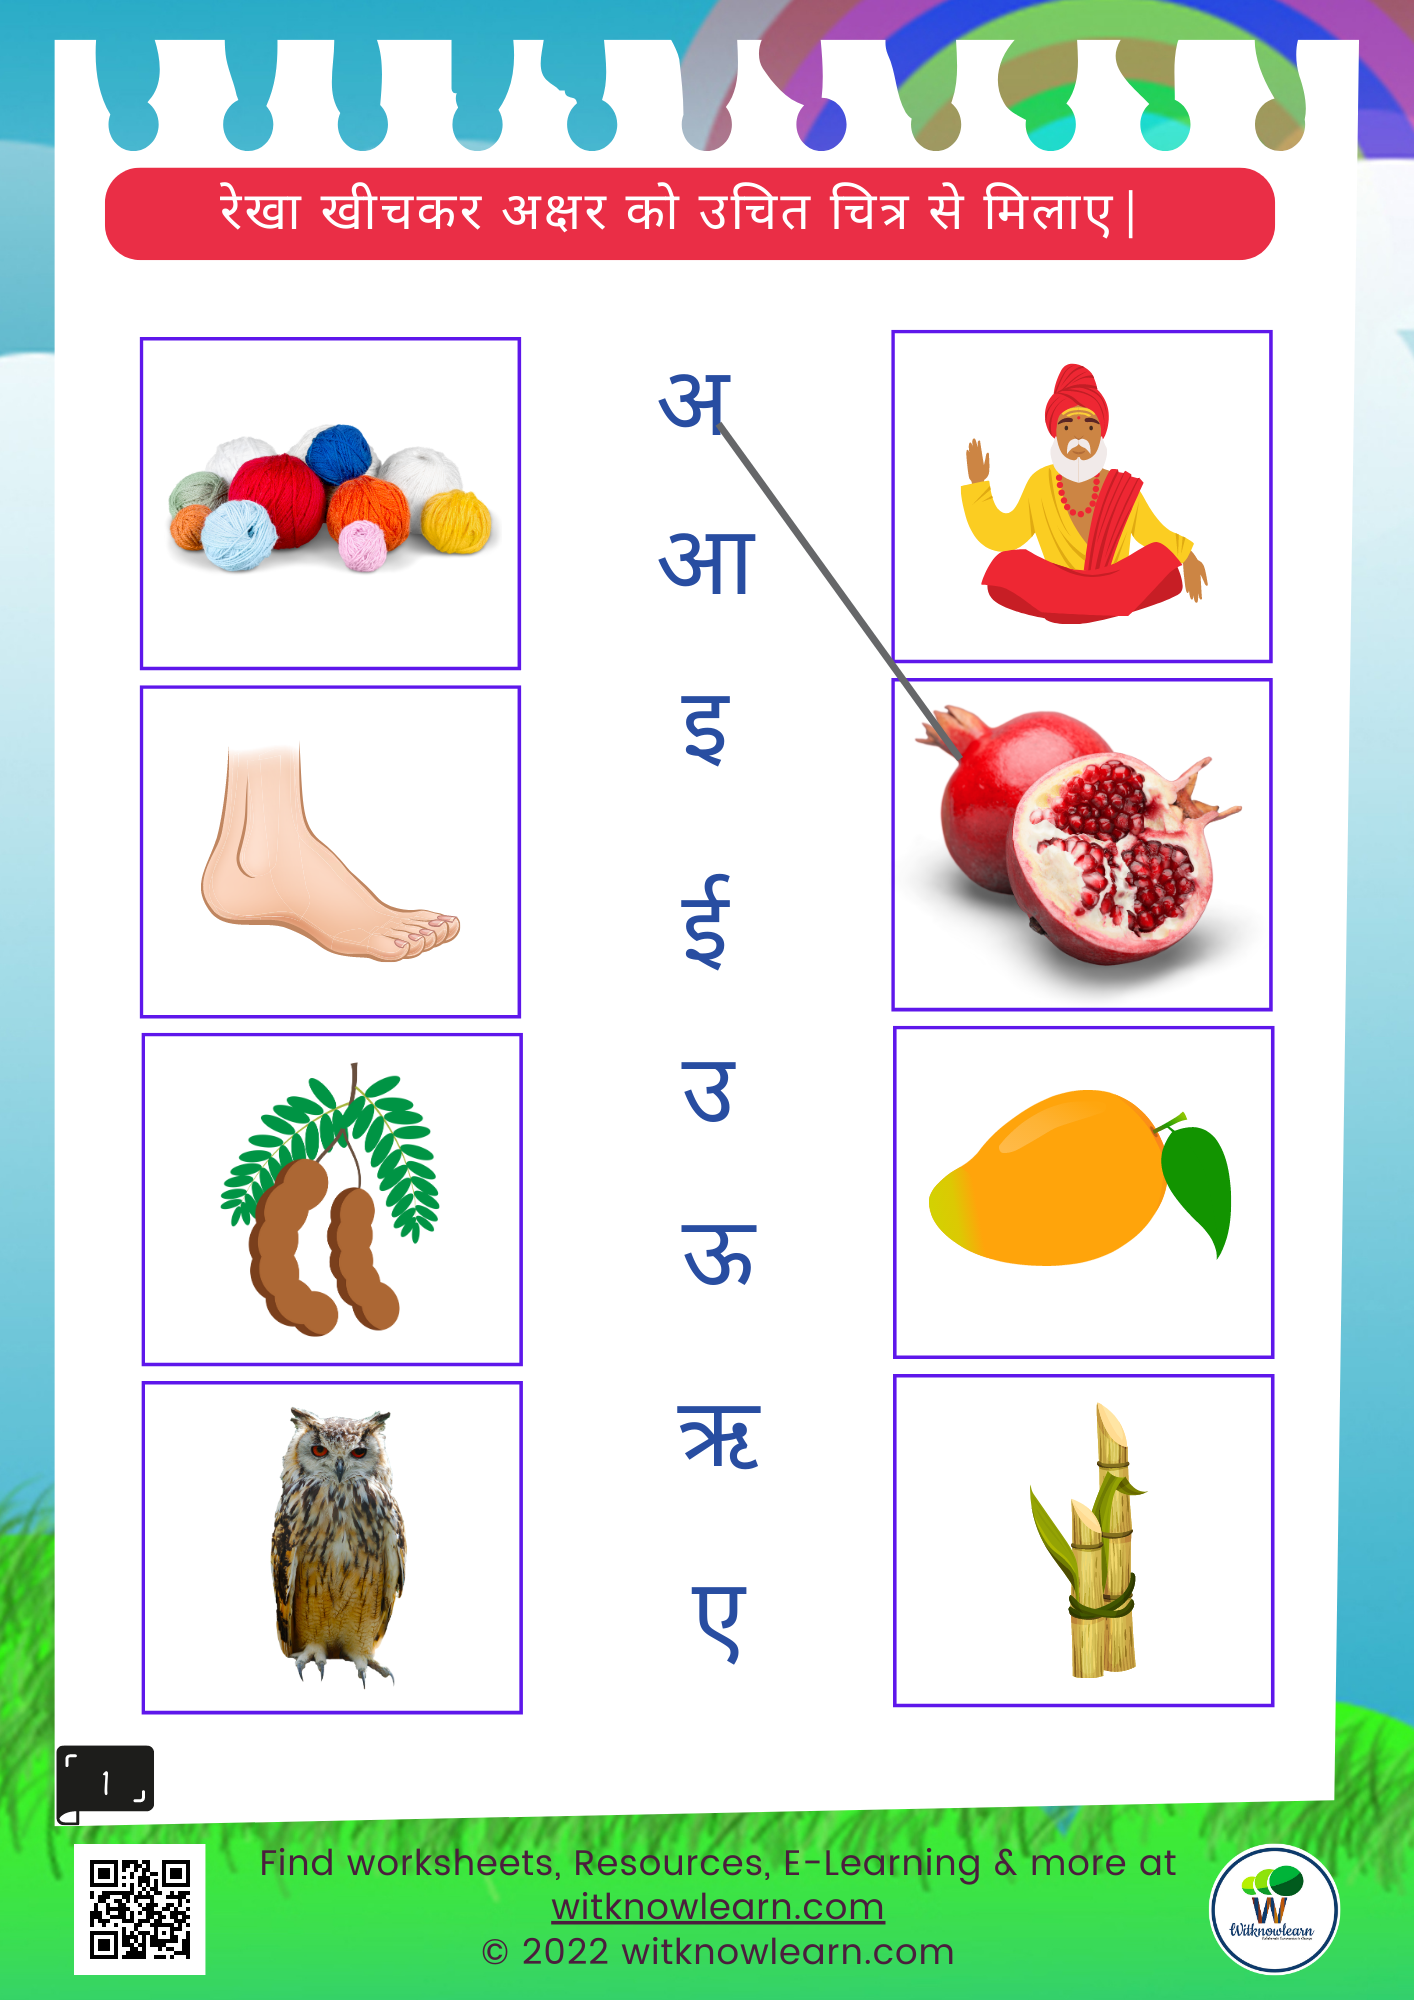 Hindi Swar Matching Worksheet: A Fun Way to Learn Hindi Vowels